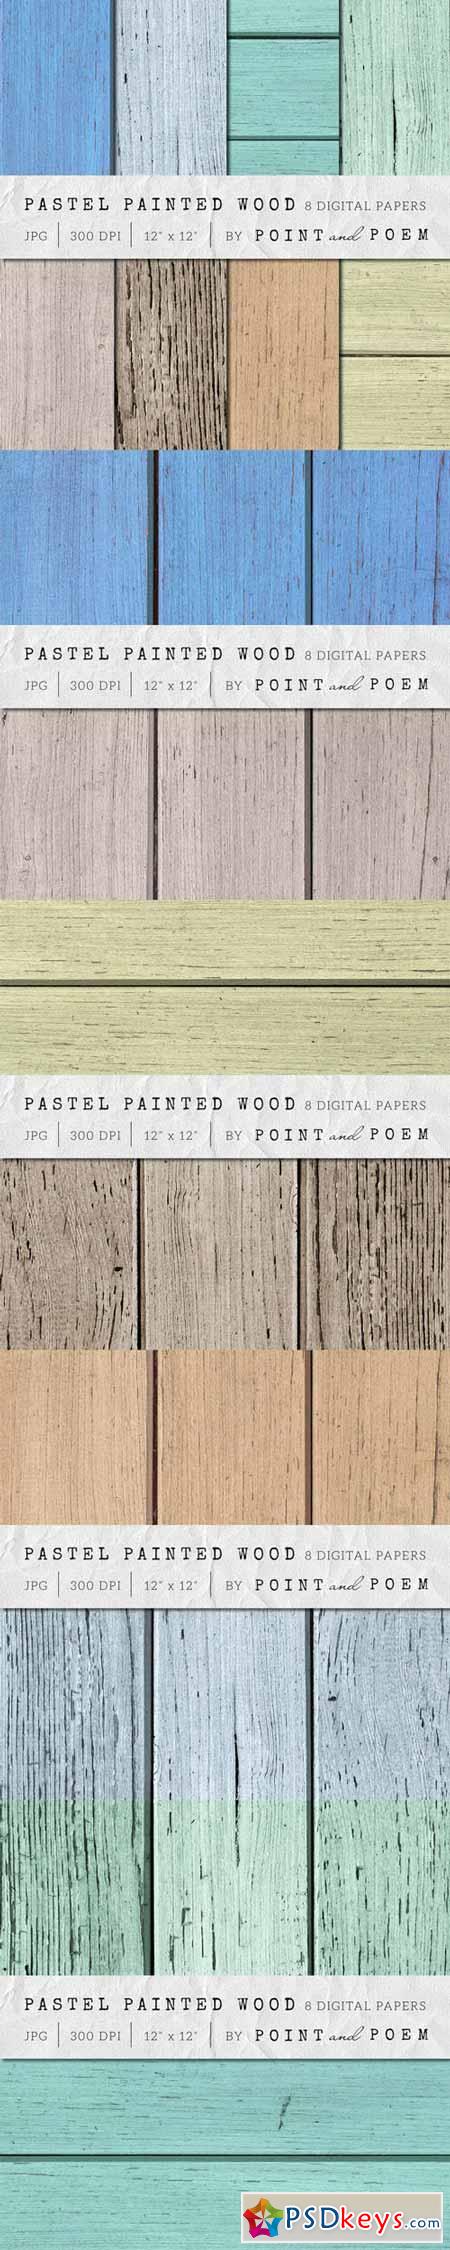 Wood Texture - Painted Pastel Wood 107708